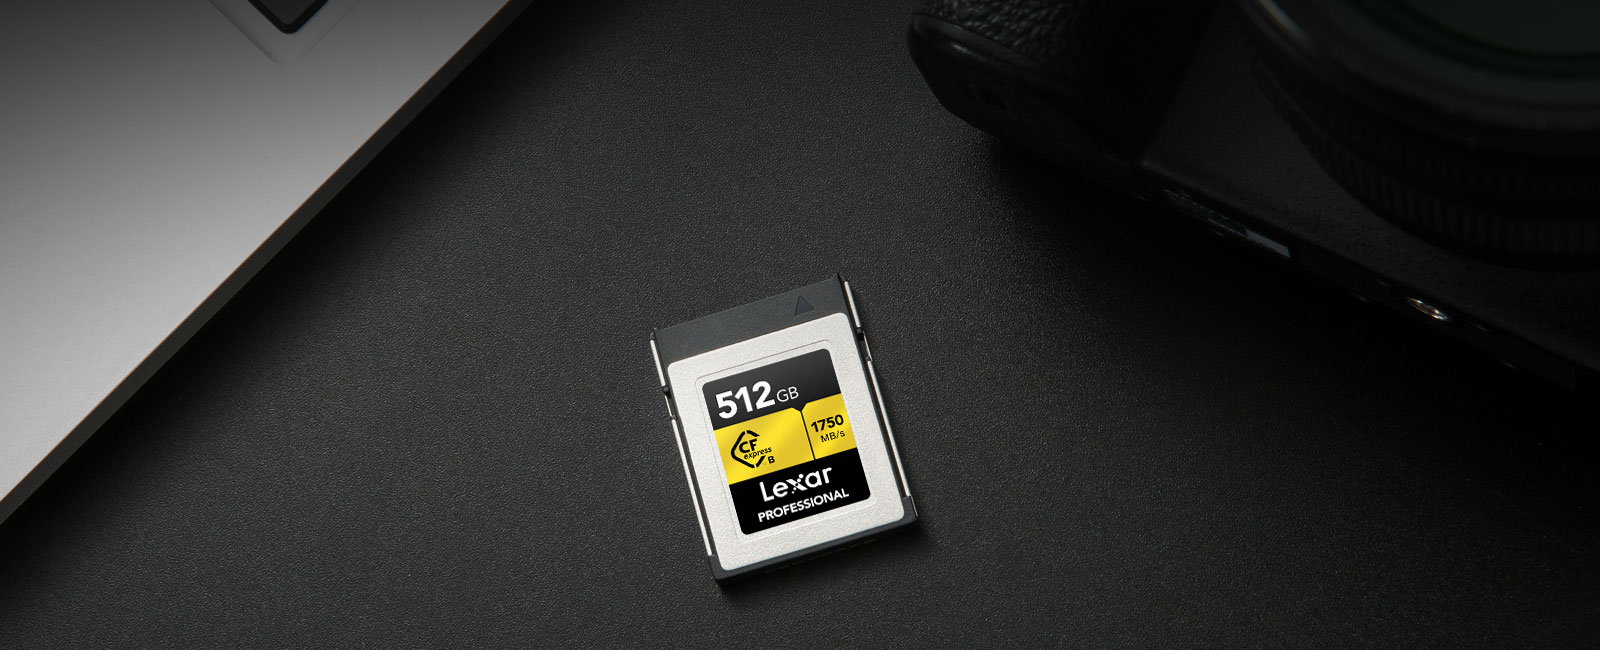 Lexar Professional 512GB memory card